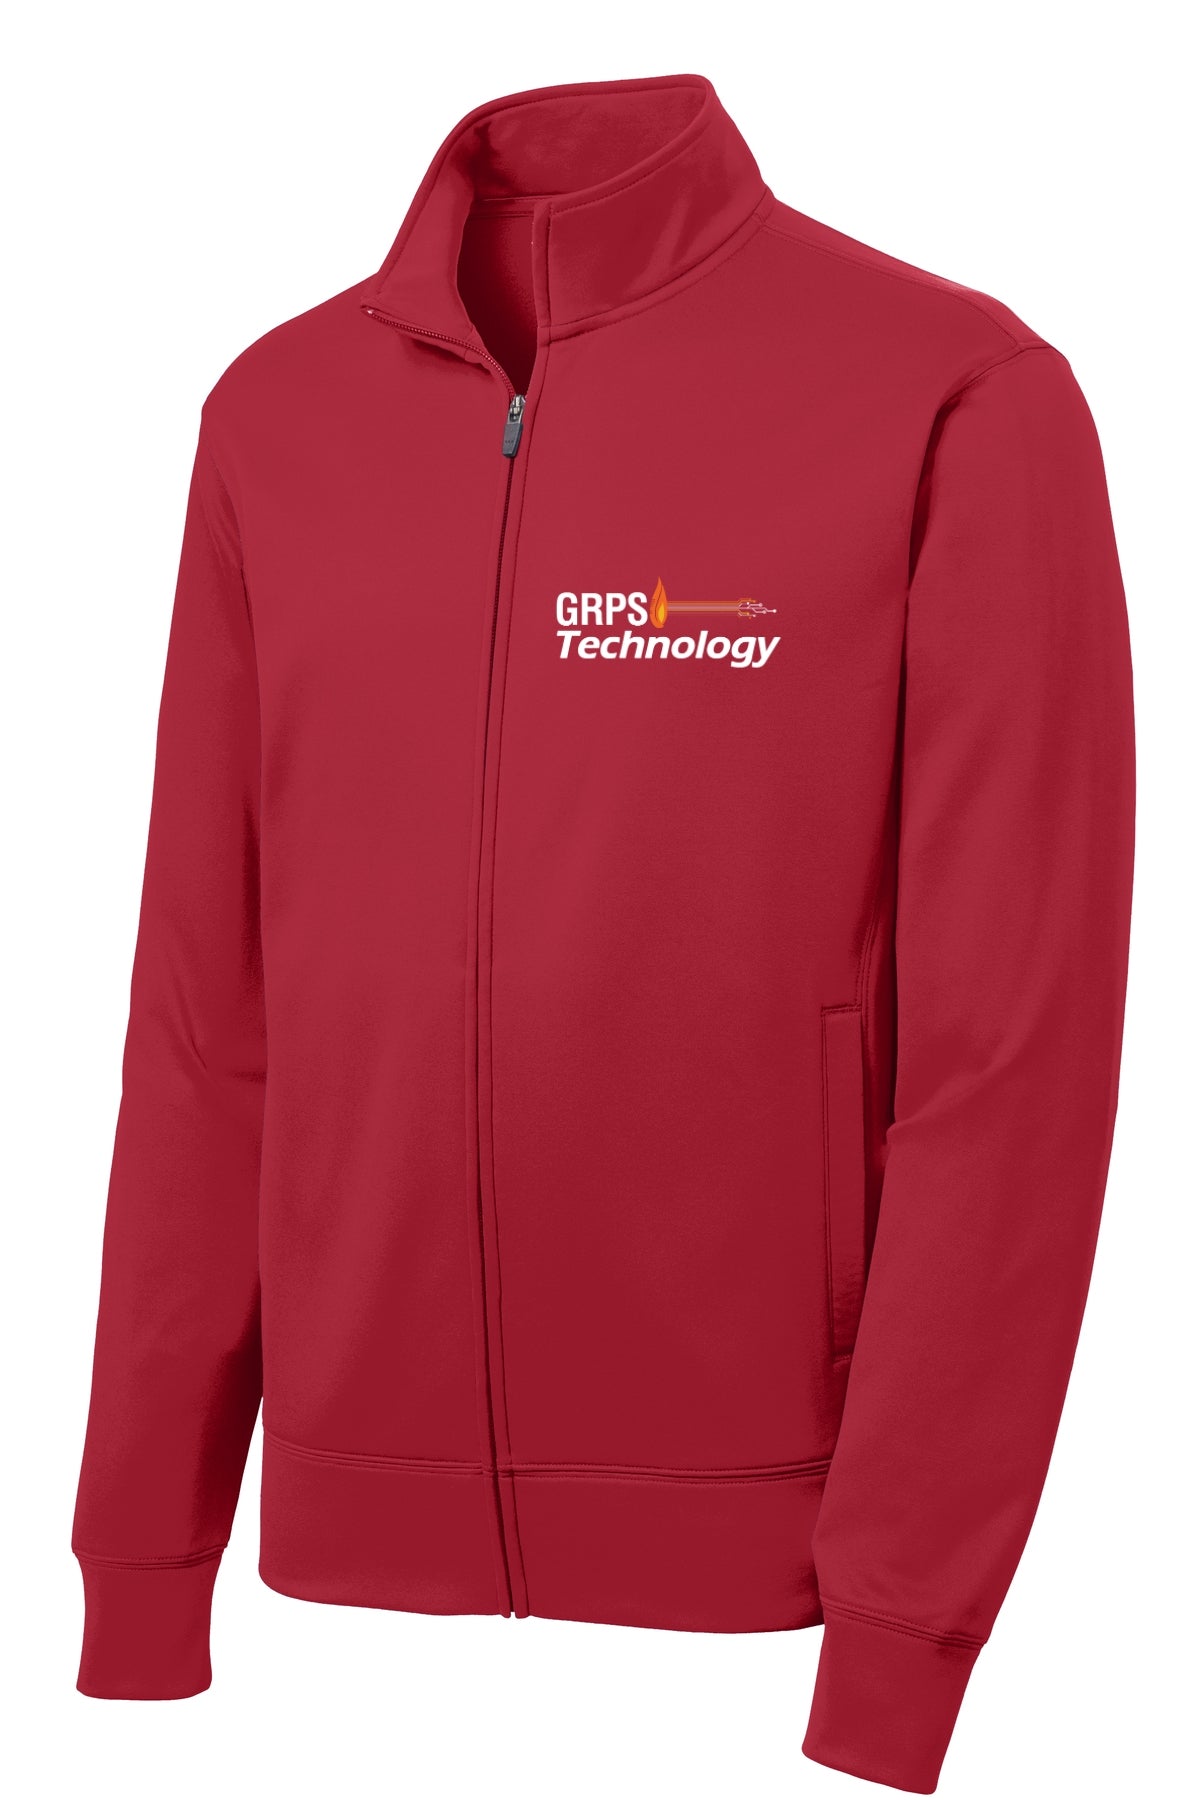 MIS-Technology Fleece Full-Zip Jacket